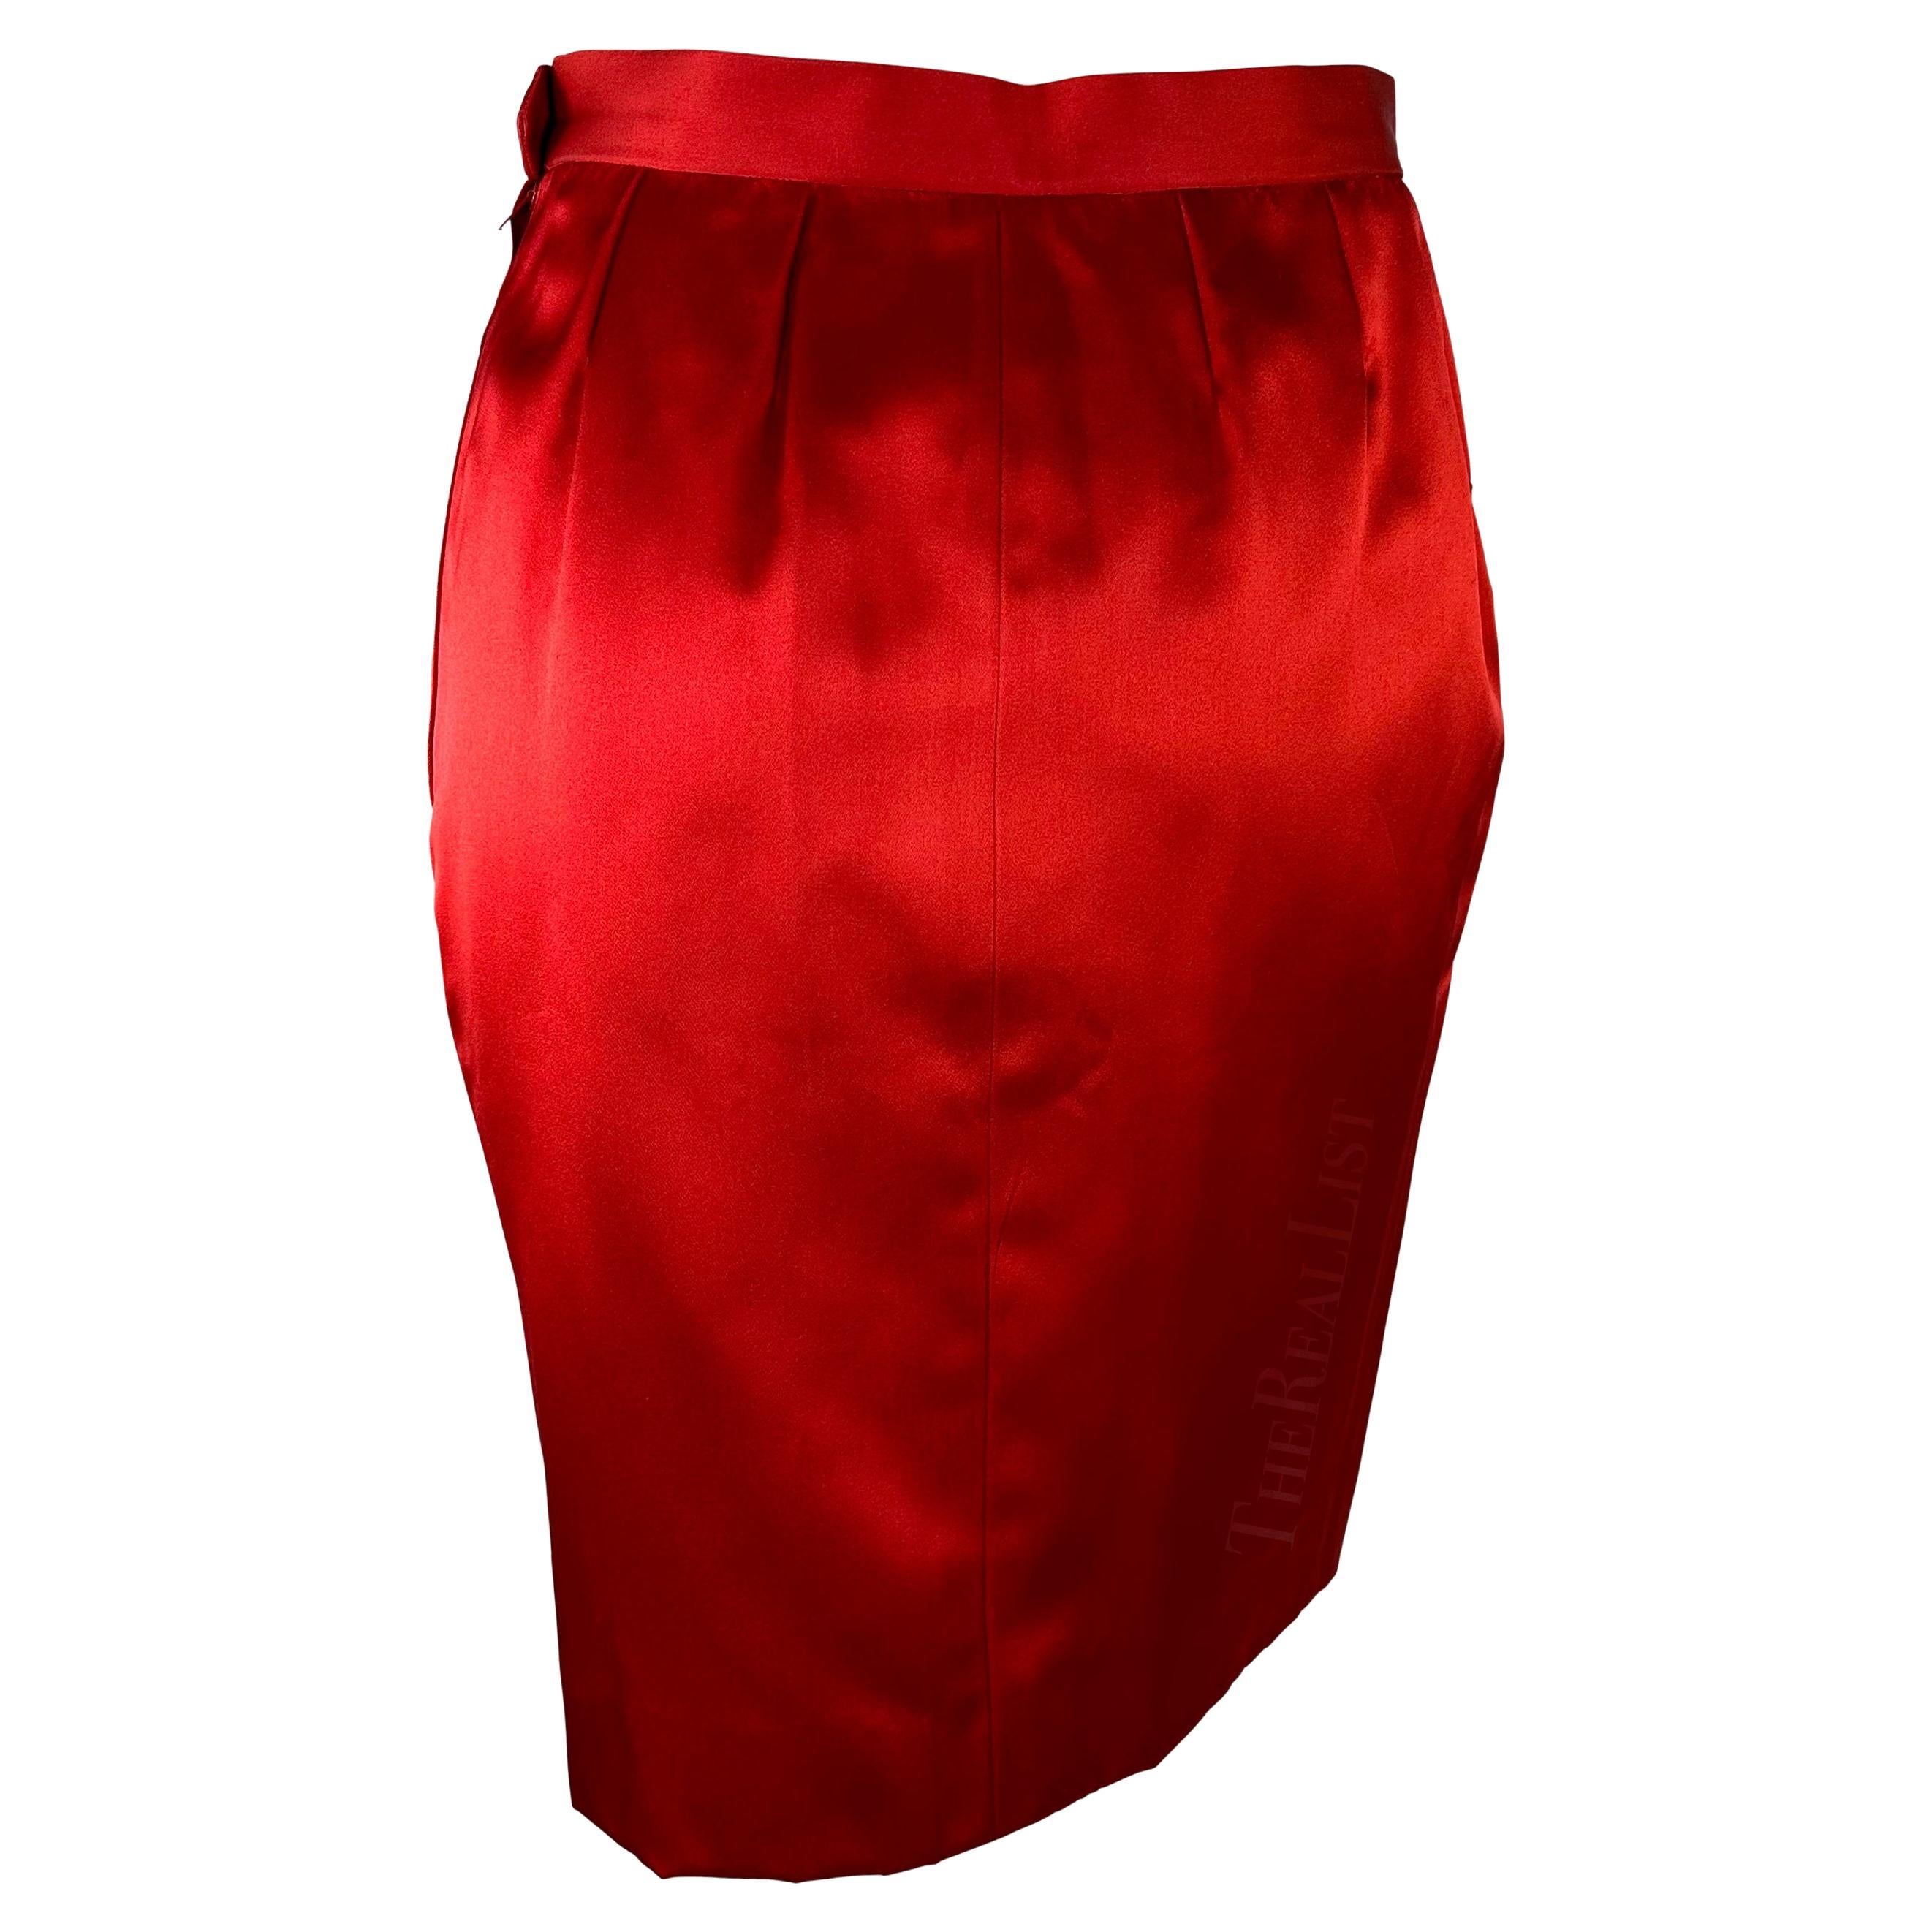 F/W 1988 Saint Laurent Rive Gauche Runway Red Satin Pocket Pencil Skirt For Sale 3